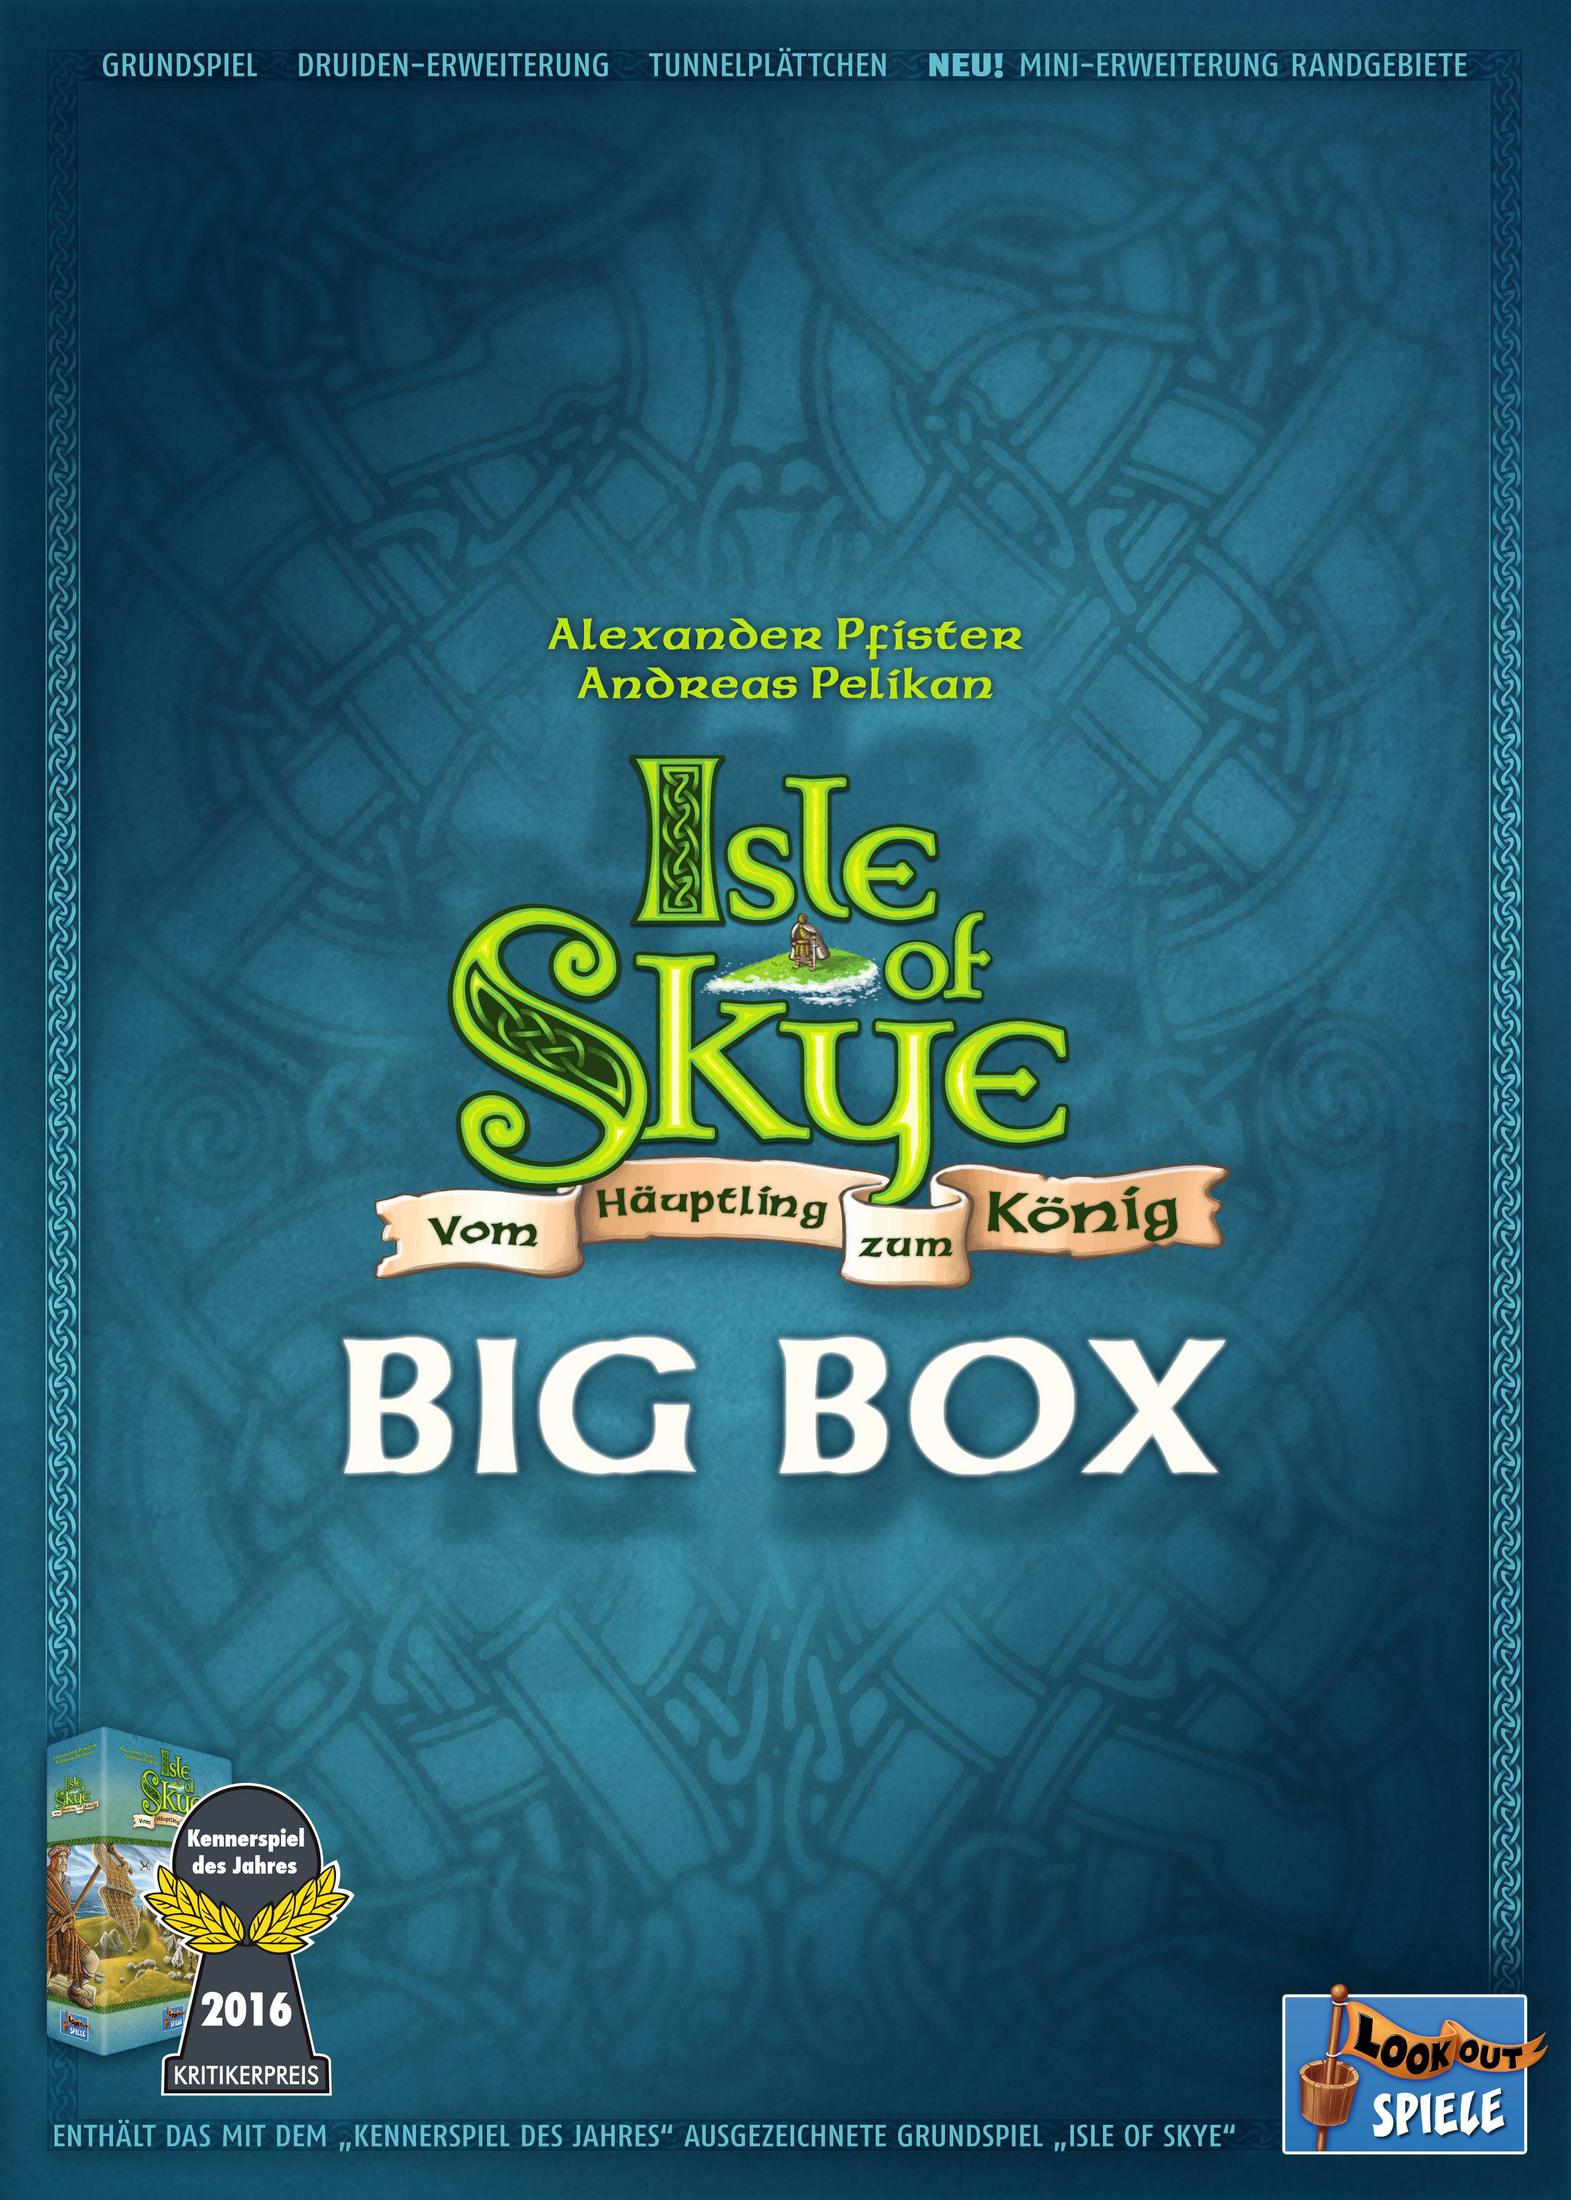 LOOKOUT GAMES BOX OF LOOD0044 Strategiespiel BIG ISLE SKYE